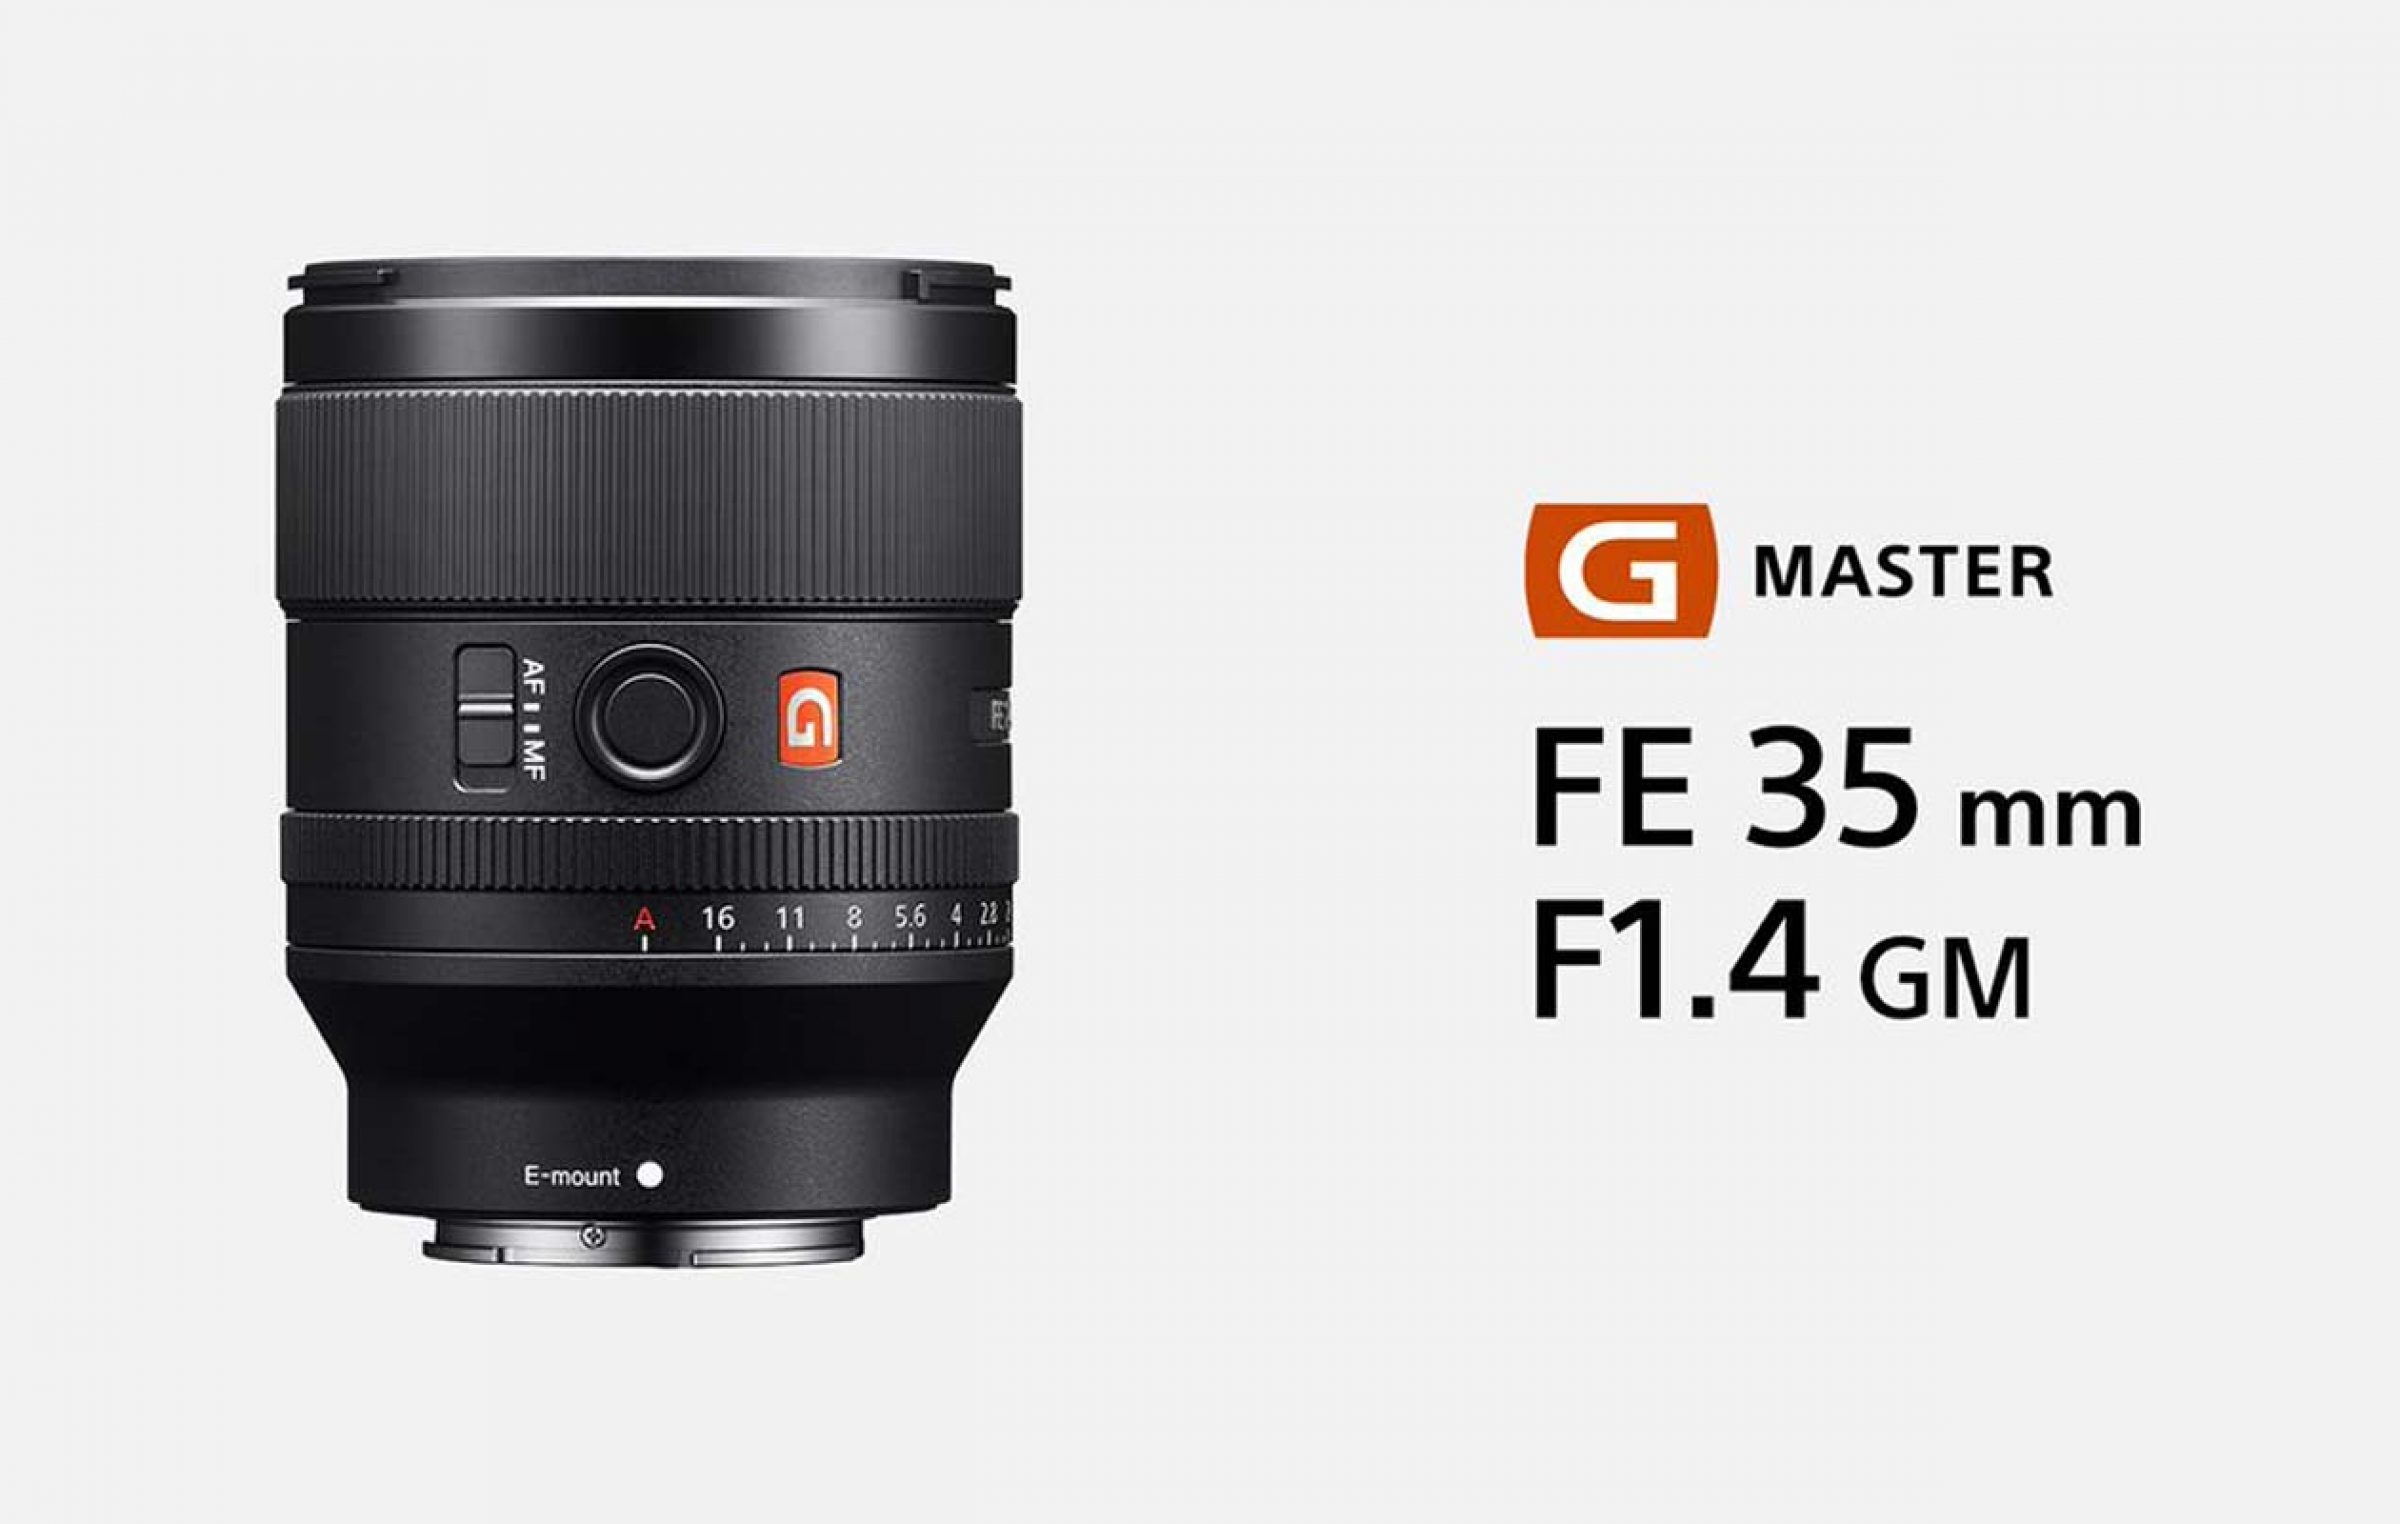 Sony Launches the G Master FE 35mm F1.4 GM Full Frame Lens